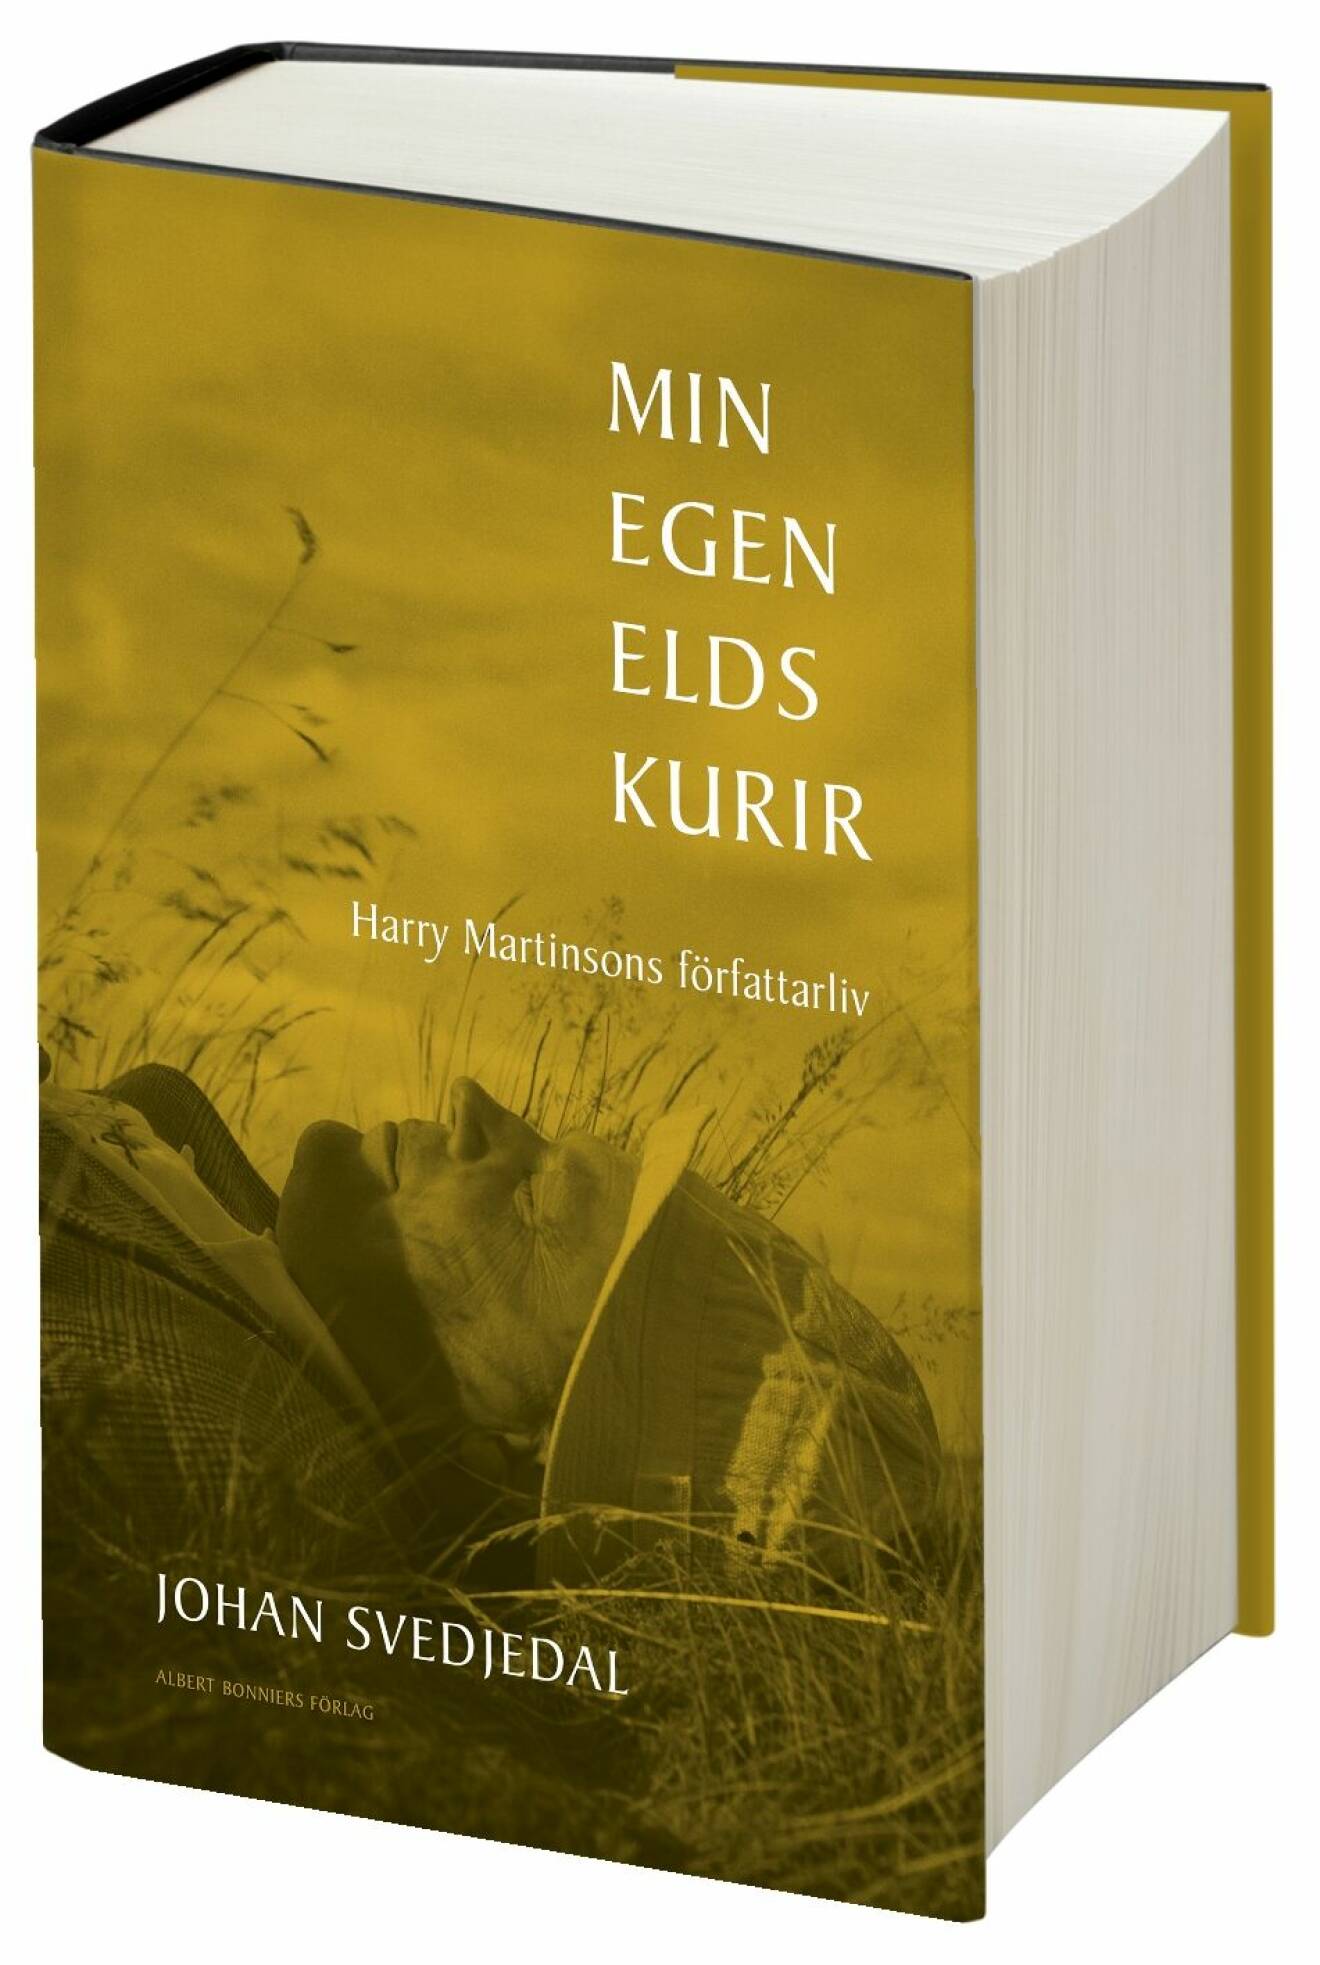 Min egen elds kurir – Harry Martinsons författarliv, Johan Svedjeda